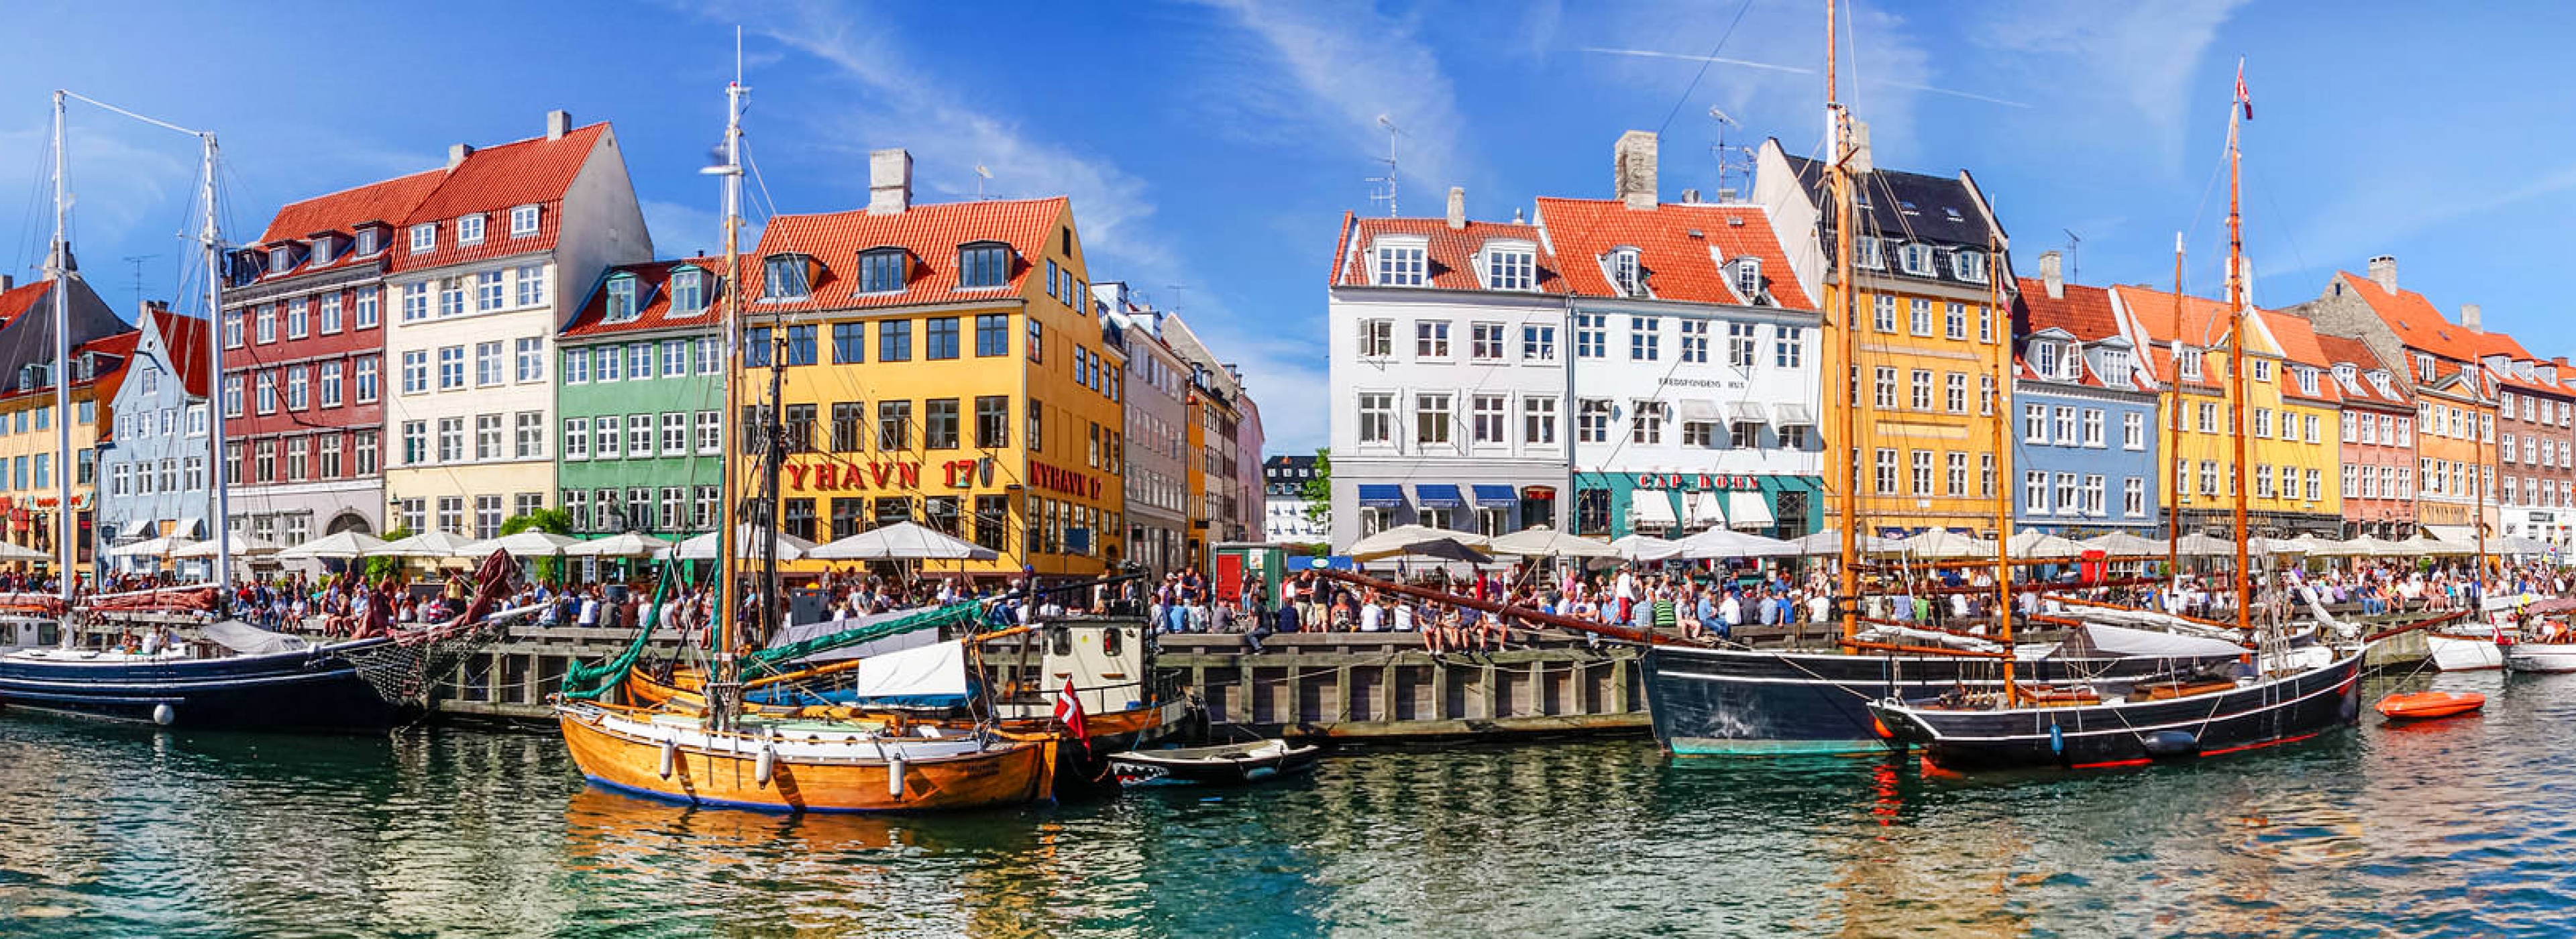 Nyhavn harbor is the most famous attraction in the capital of Denmark - Copenhagen